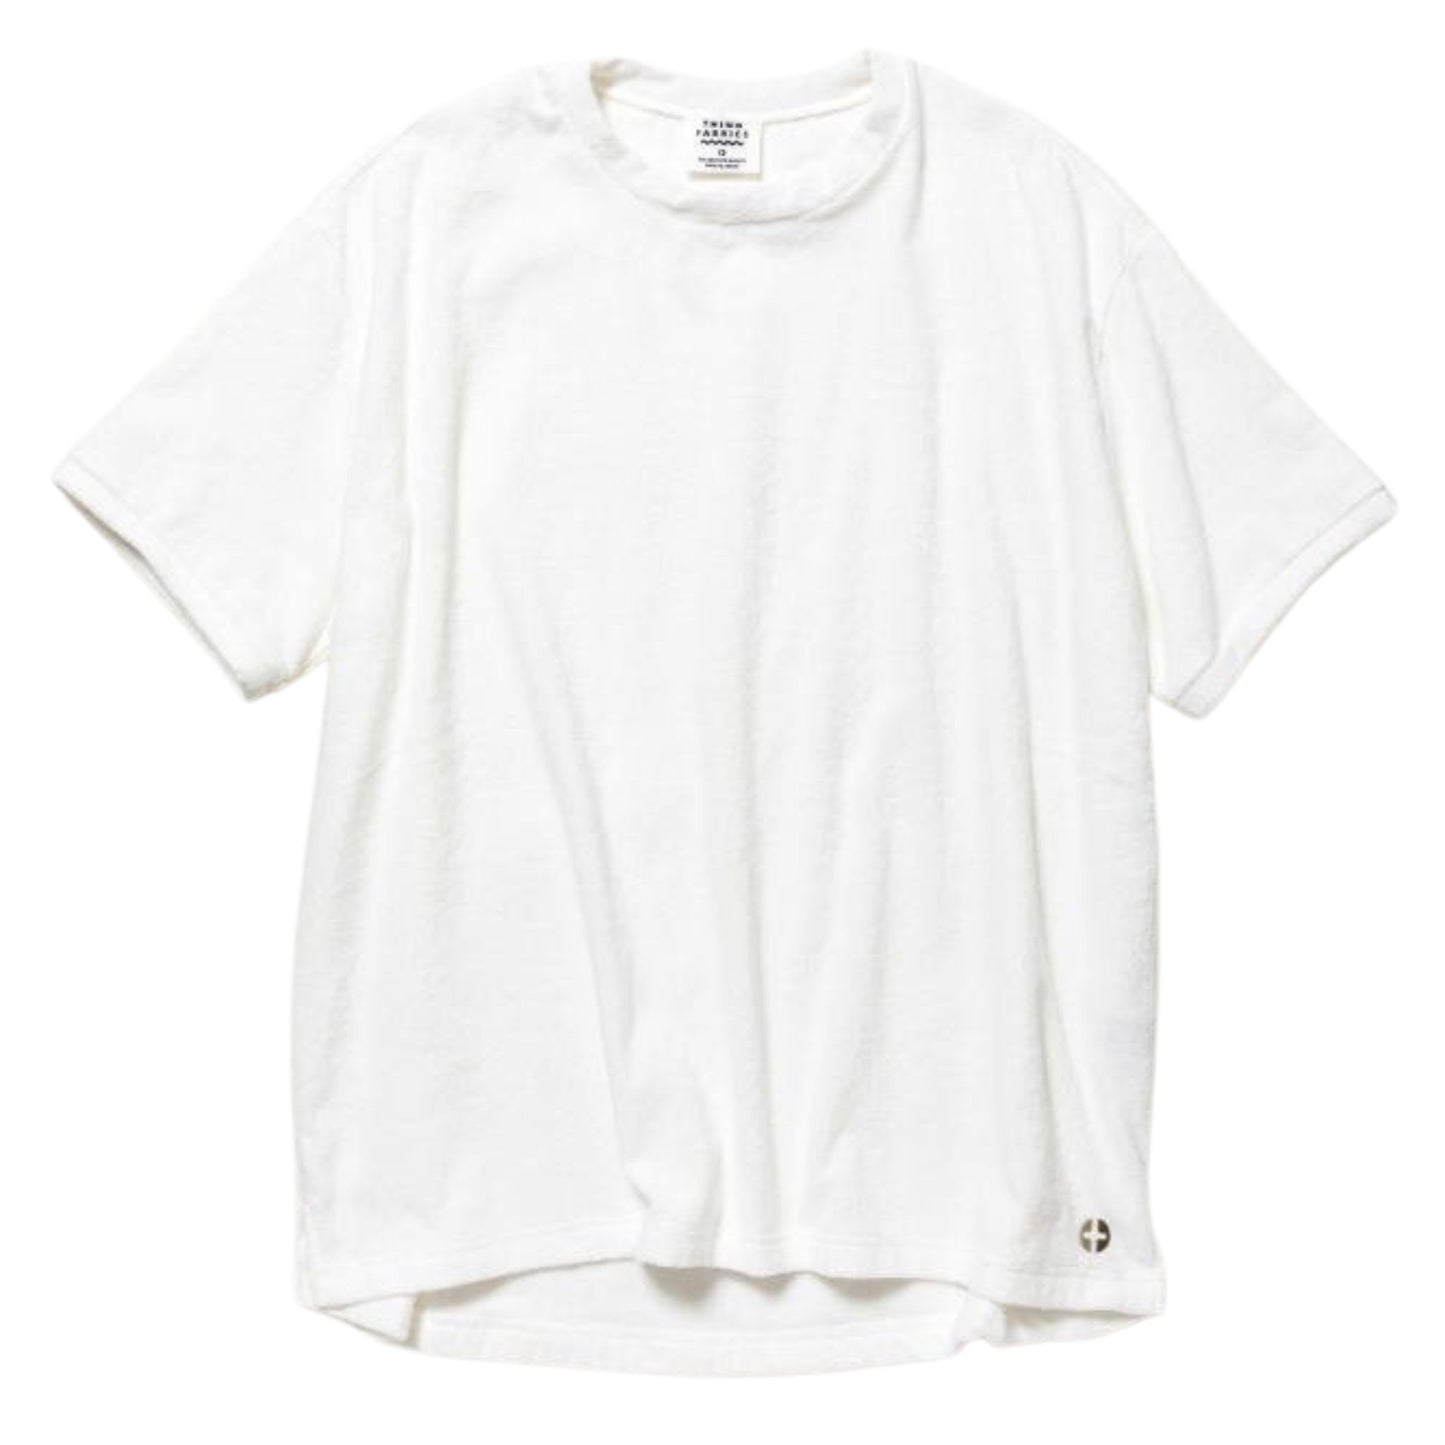 THING FABRIC - Short Pile T-shirt